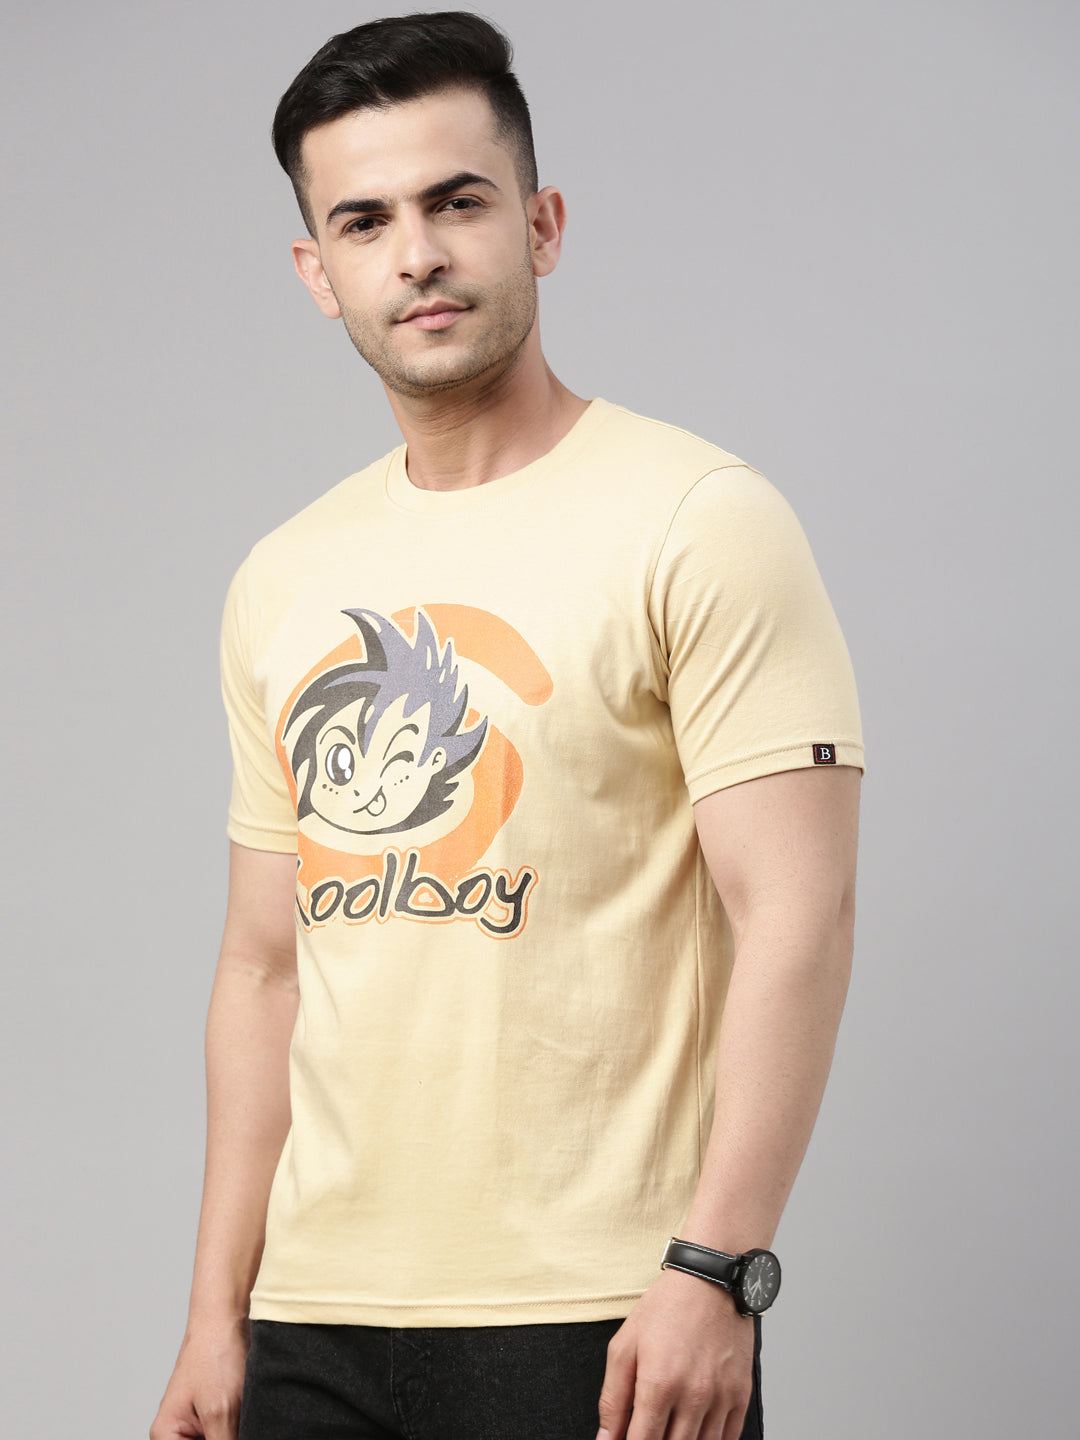 Kool Boy T-Shirt Graphic T-Shirts Bushirt   